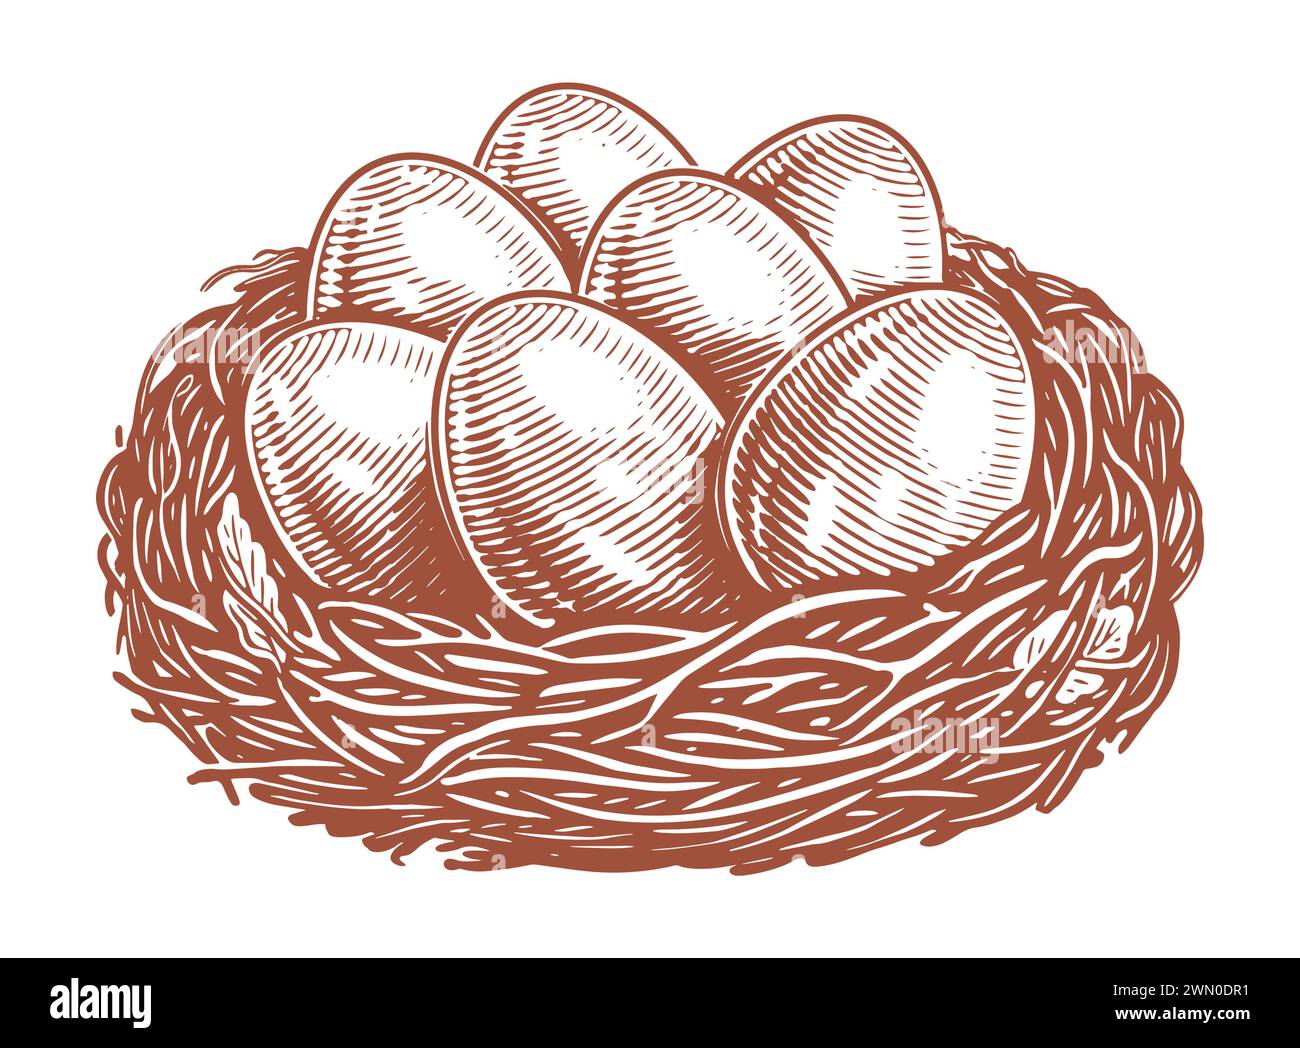 Eier im Nest. Handgezeichnete Skizze Vintage Vektor Illustration Stock Vektor